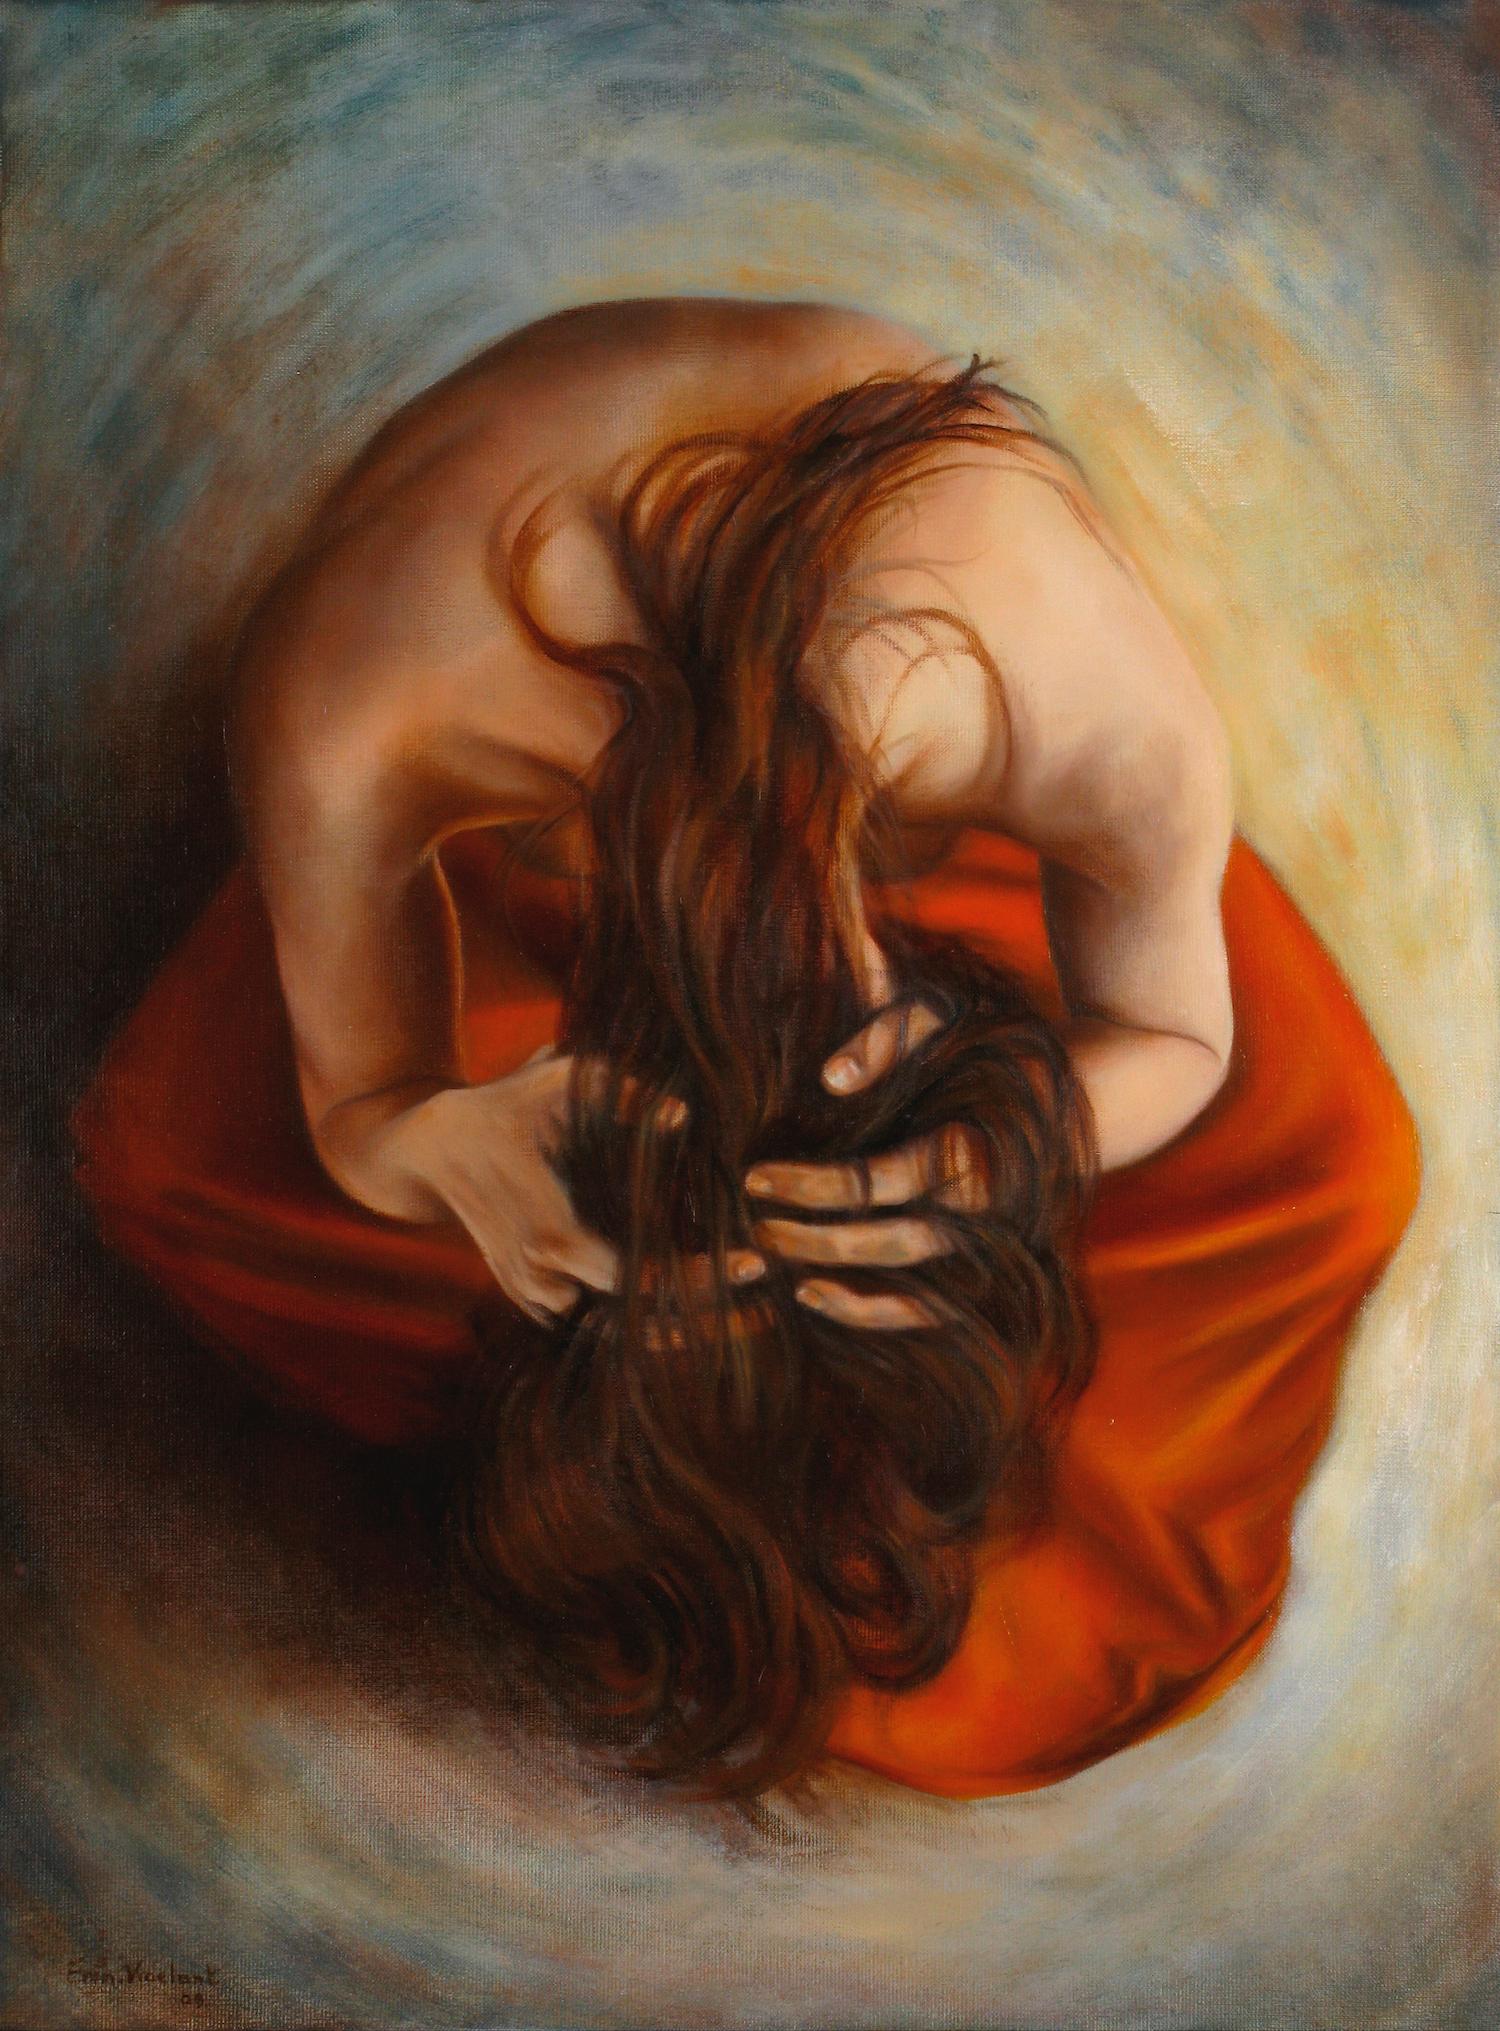 "Sorrow" figuratif nude oil on linen canvas 82x60cm 2009